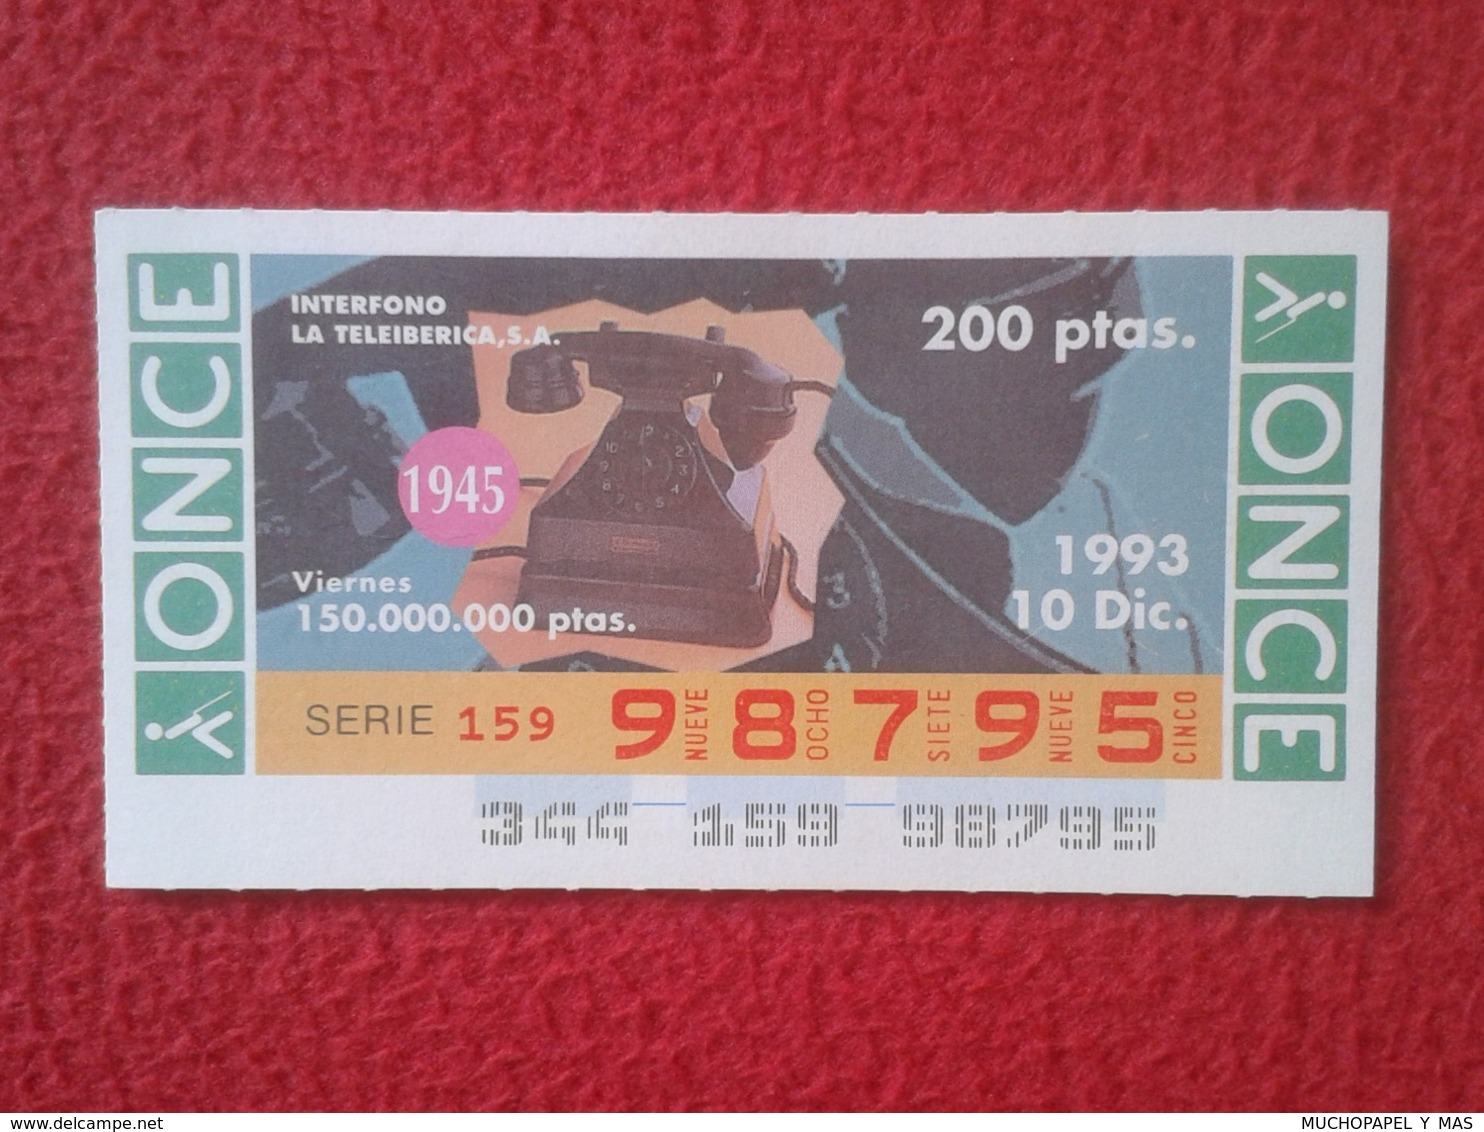 CUPÓN DE ONCE 1993 LOTTERY LOTERIE SPAIN BLIND LOTERÍA INTERFONO LA TELEIBERICA , S.A. INTERCOM INTERPHONE CITOFONO VER - Billetes De Lotería